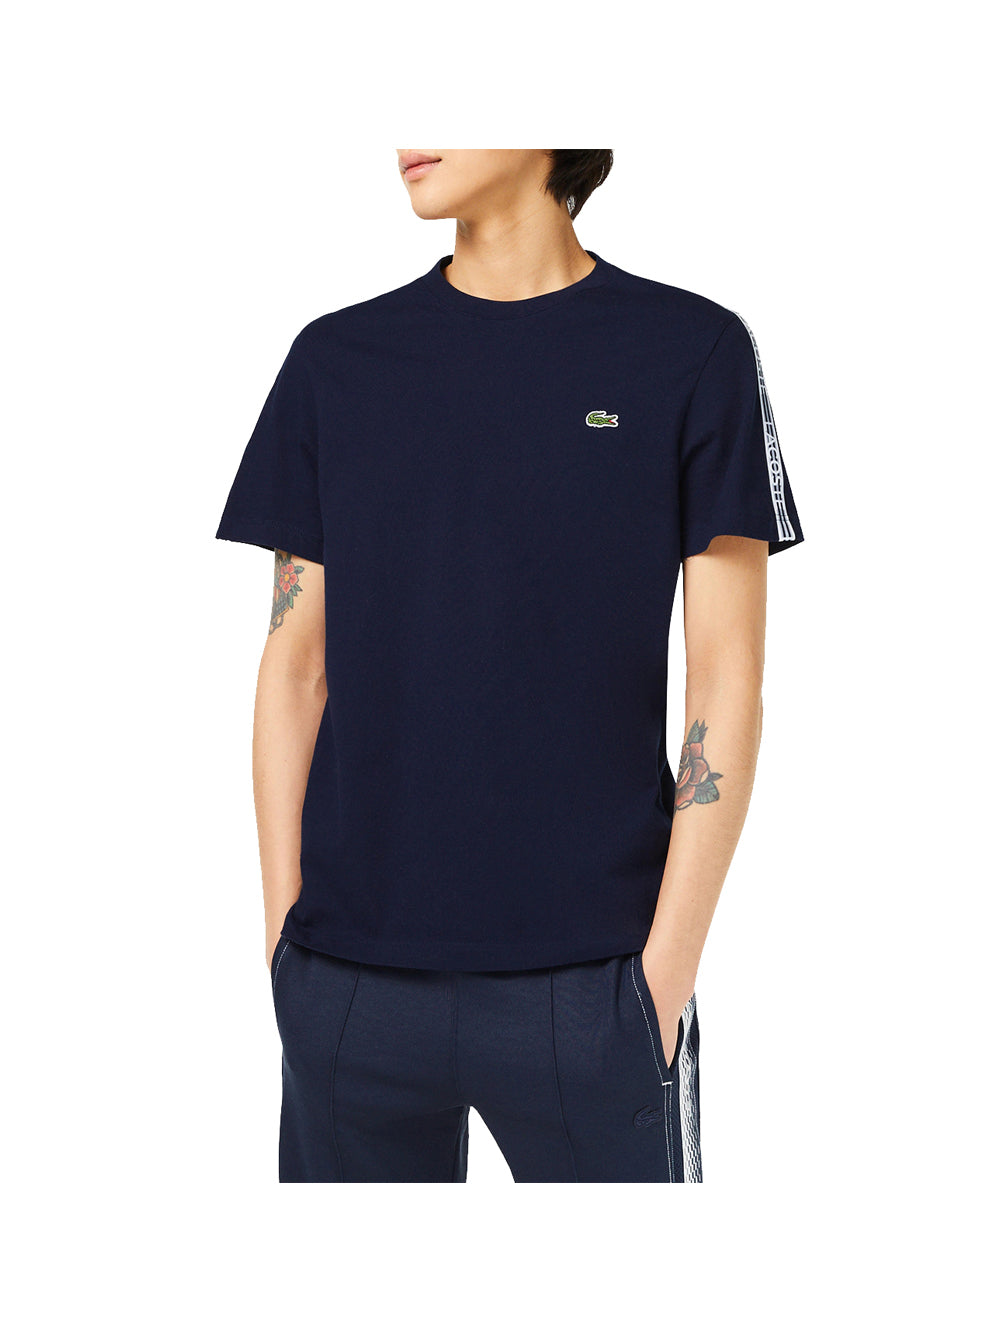 LACOSTE T-shirt Uomo Blu Navy con bande logate laterali NAVY